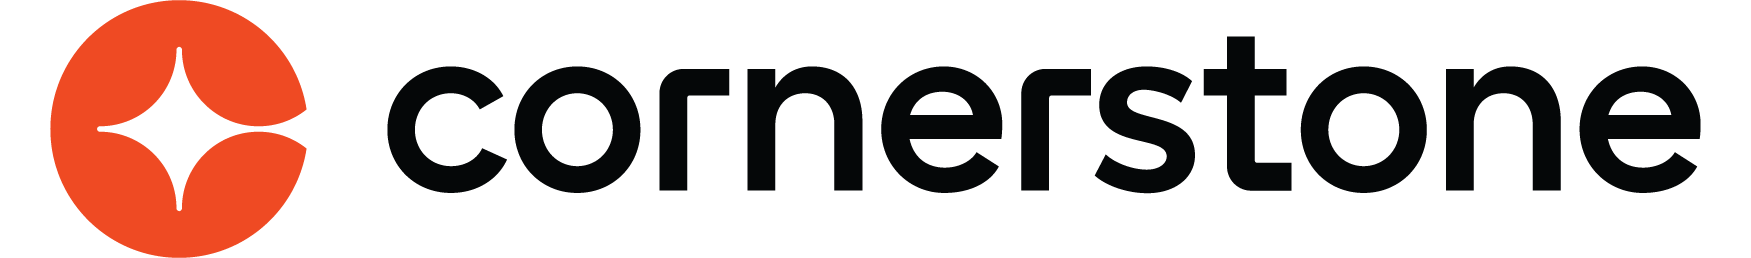 Cornerstone-Logo-Trans